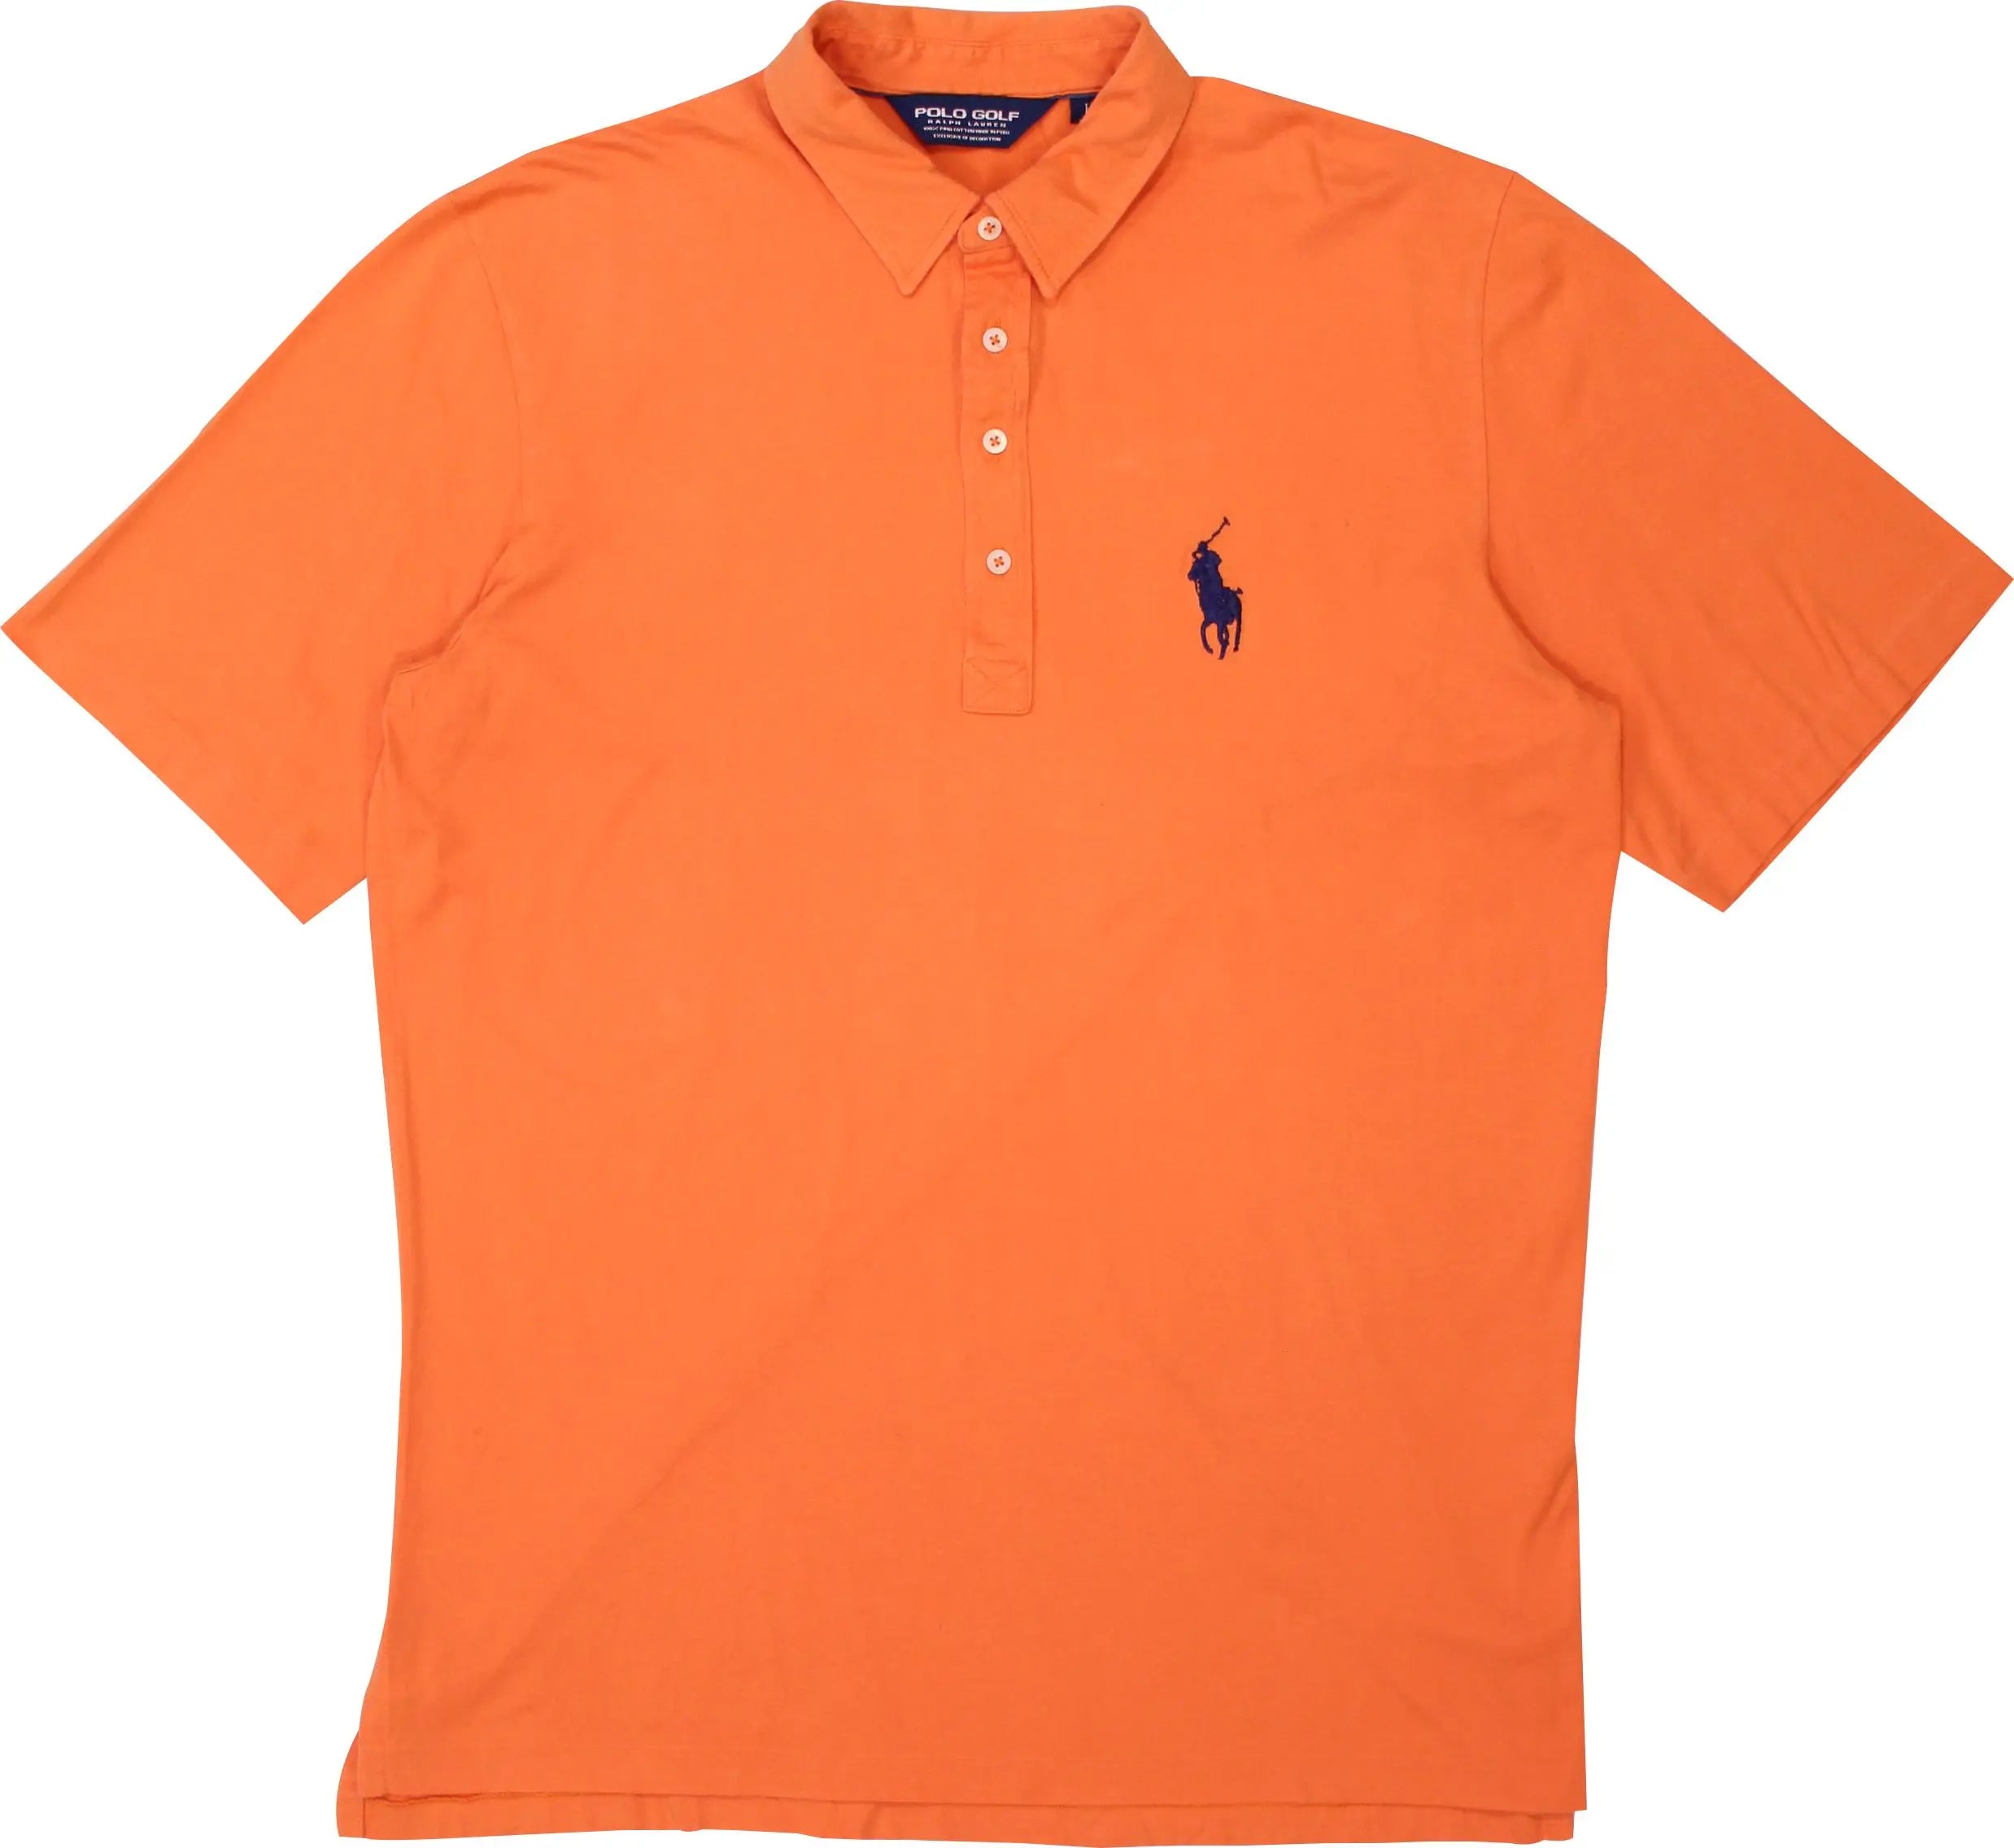 Ralph Lauren - Orange Polo Shirt by Ralph Lauren- ThriftTale.com - Vintage and second handclothing